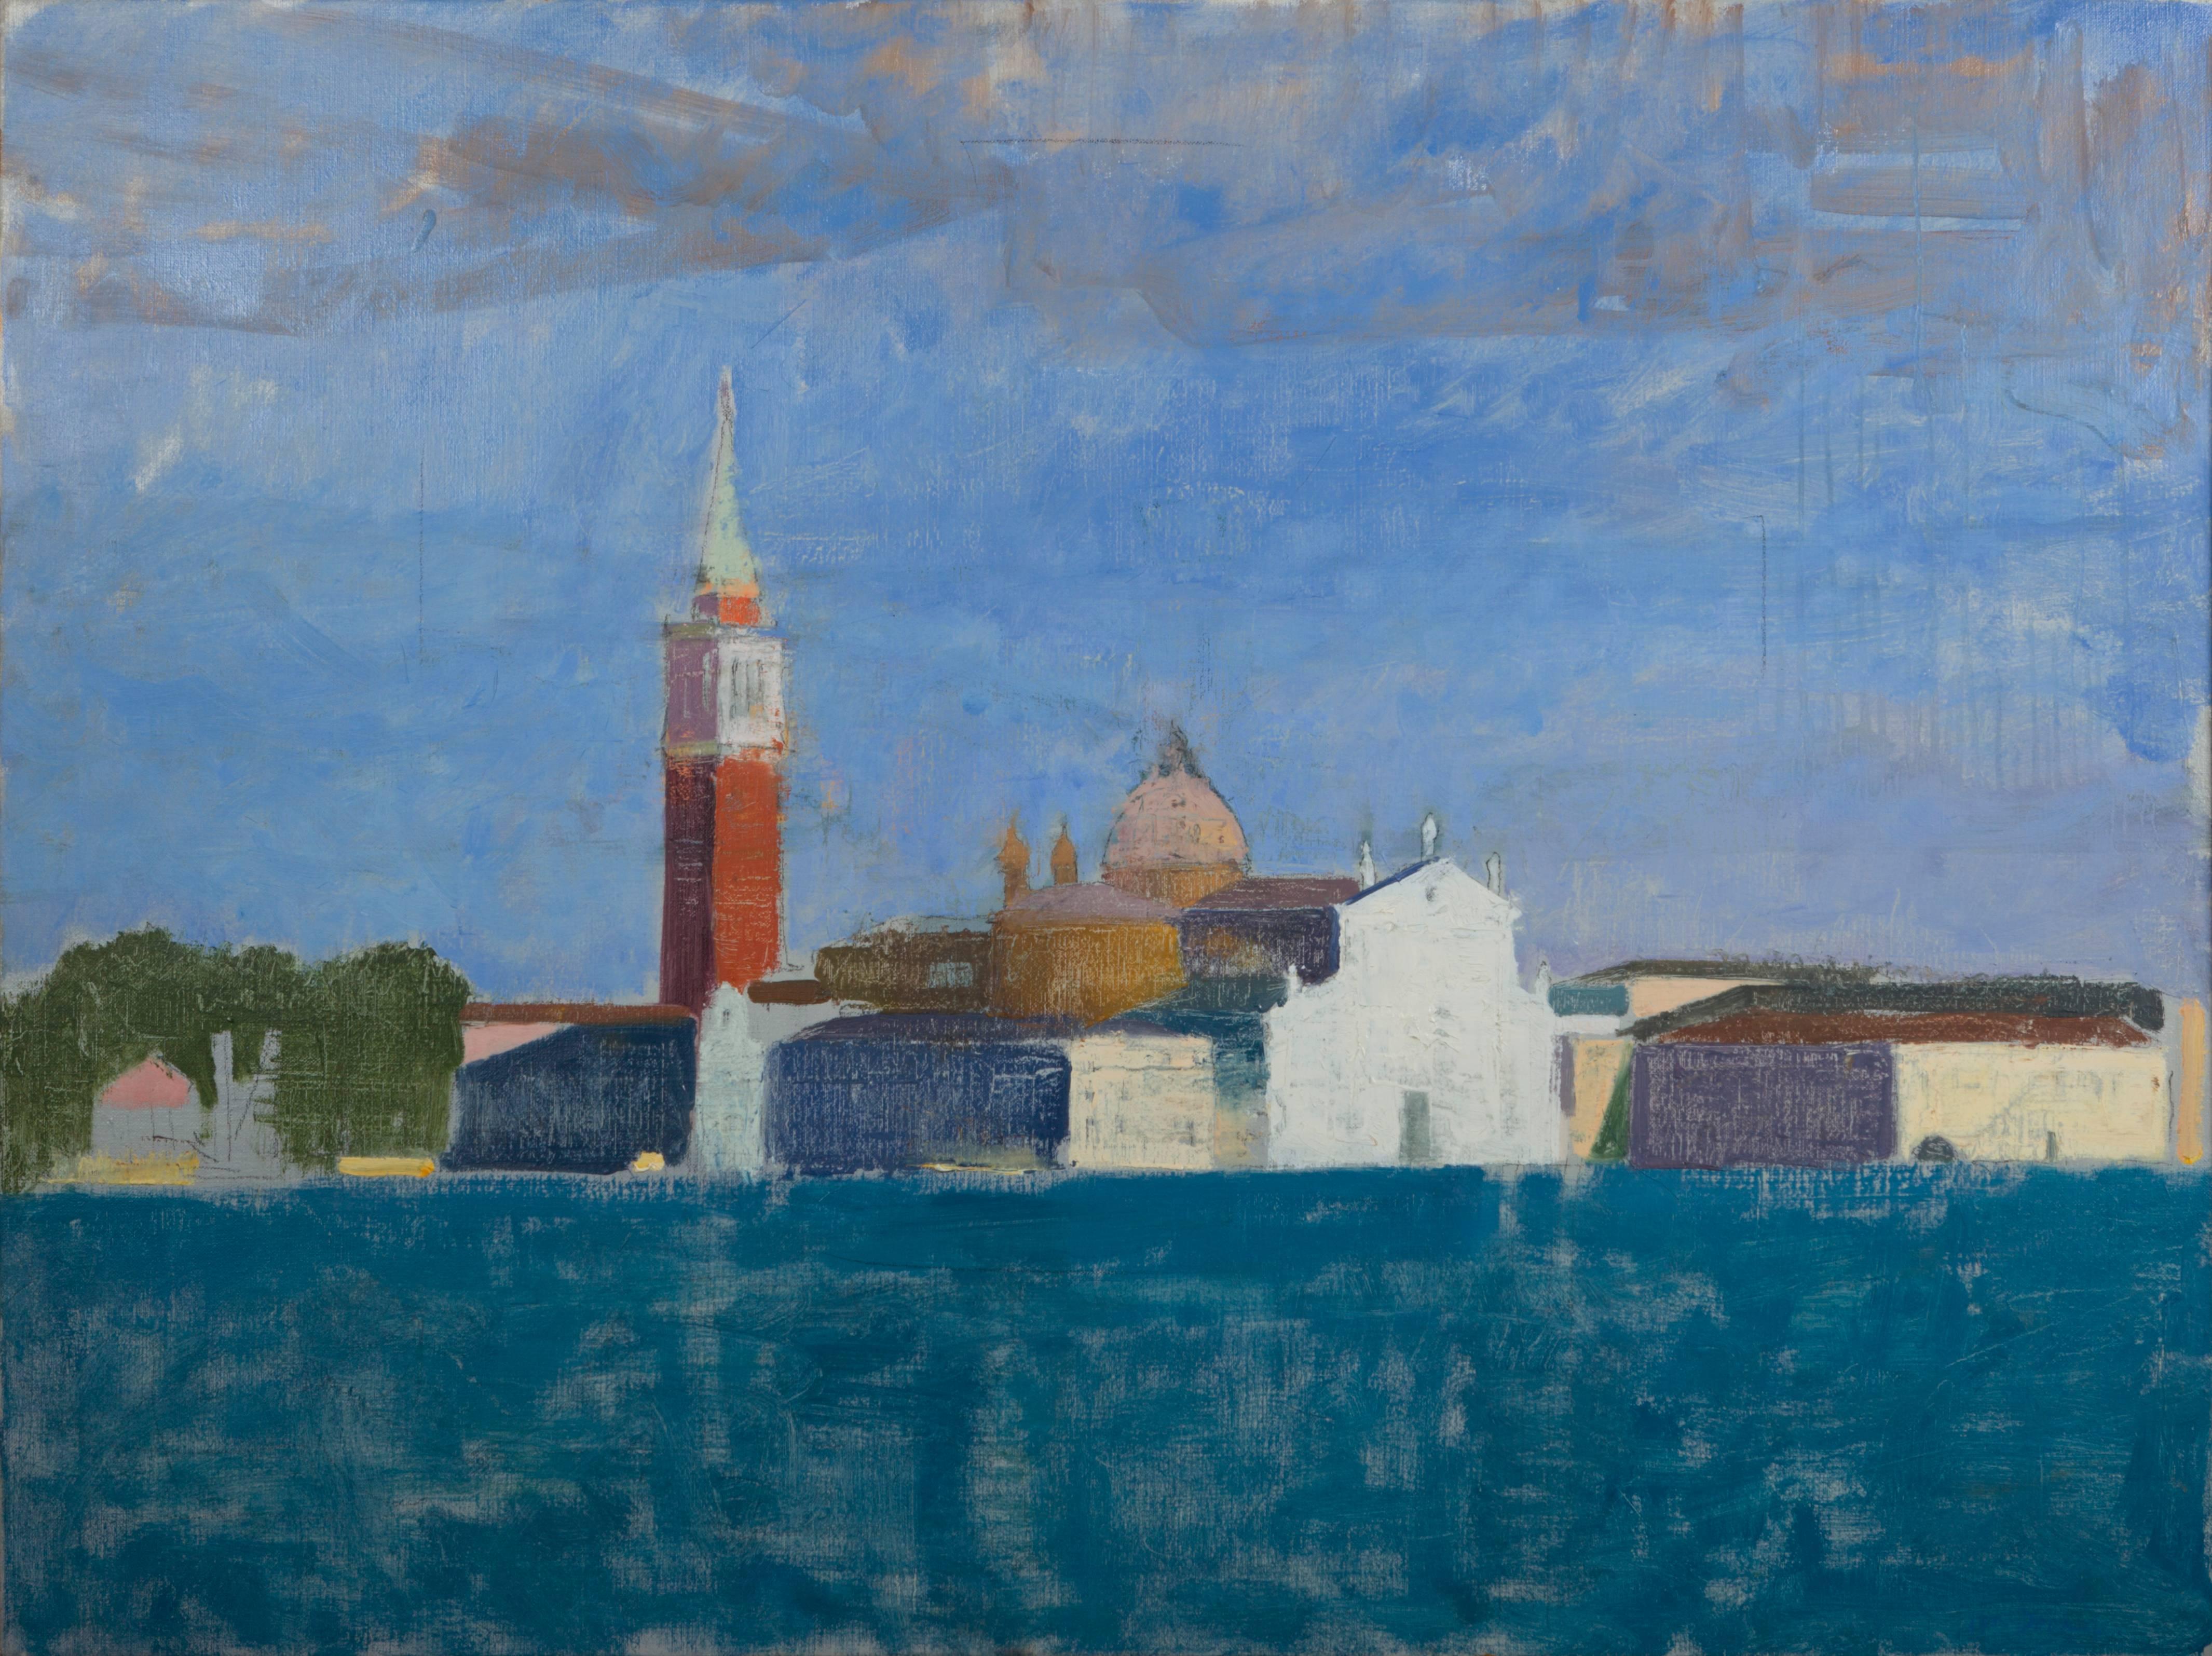 Landscape Painting Adam Van Doren - San Giorgio de San Marco, Venise, Italie